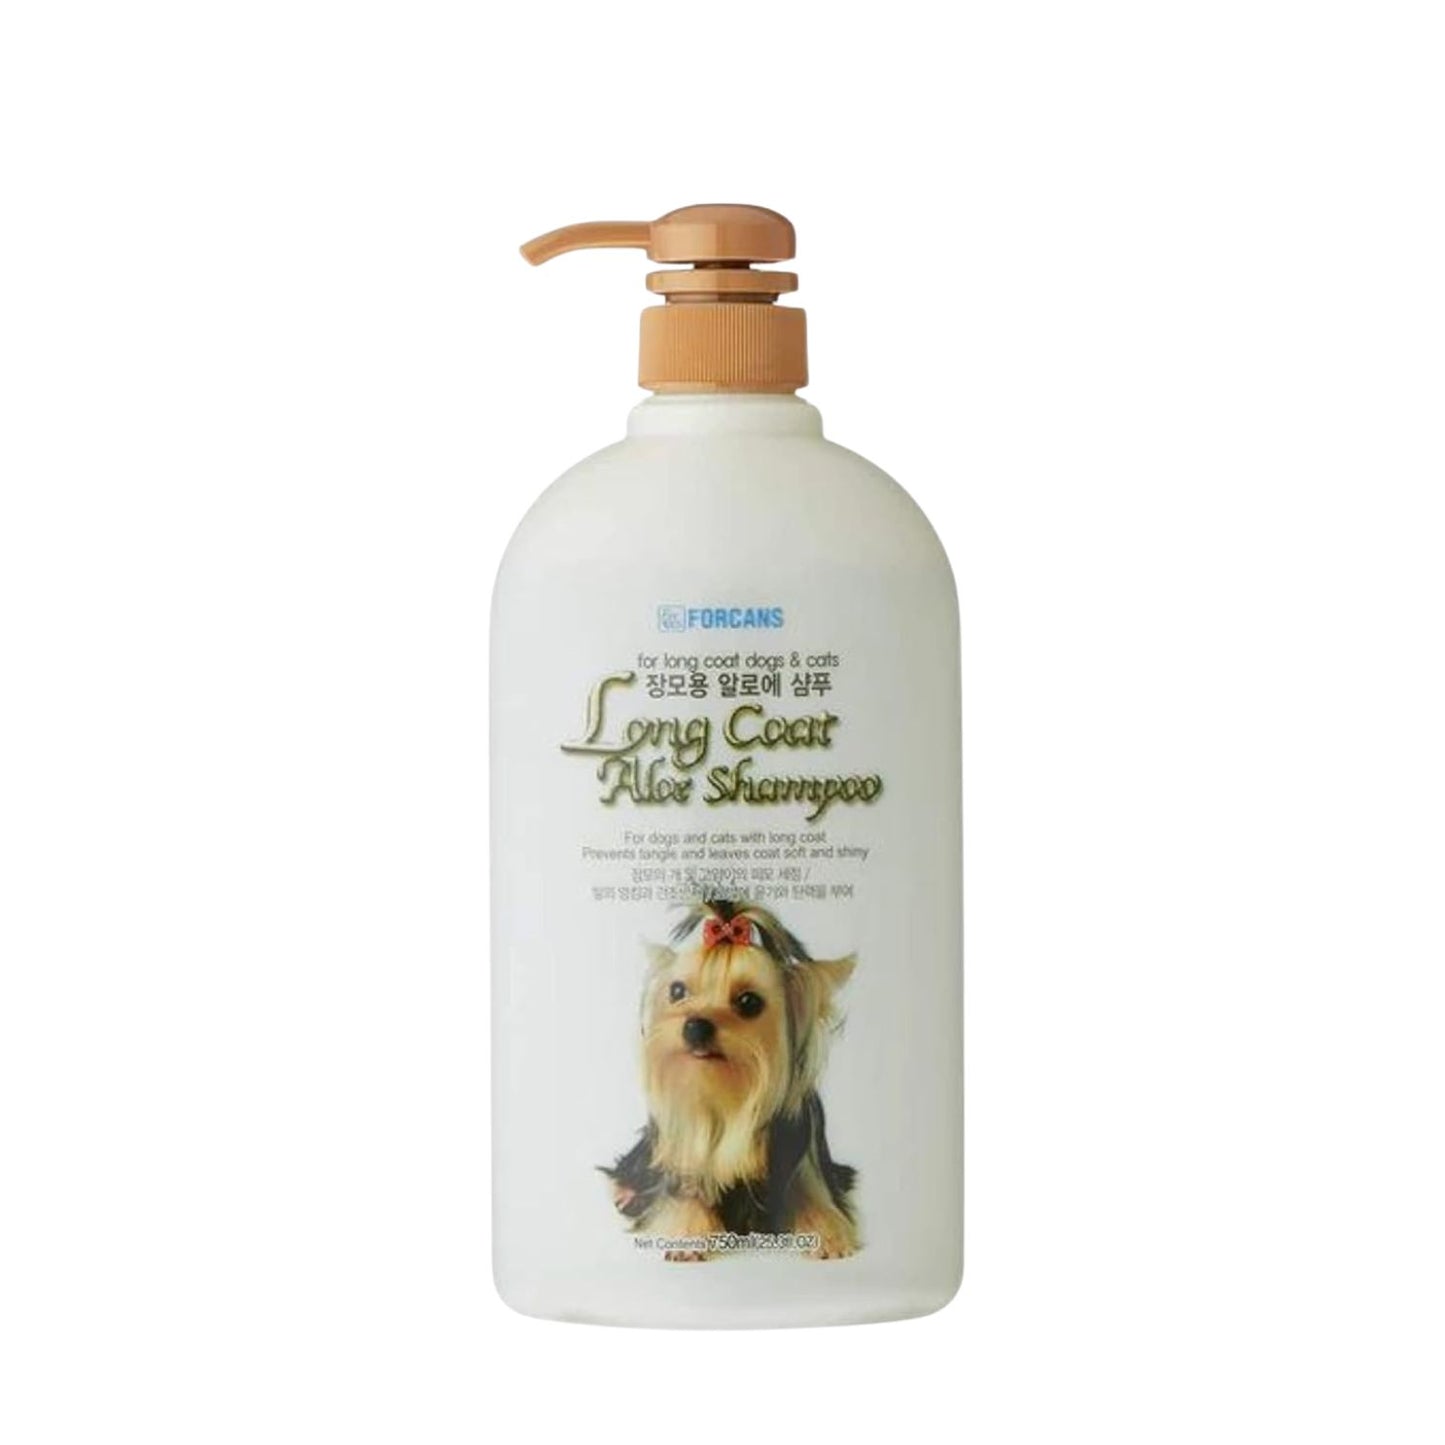 Forbis/Forcans Long Coat Aloe Dog & Cat Shampoo-750ml